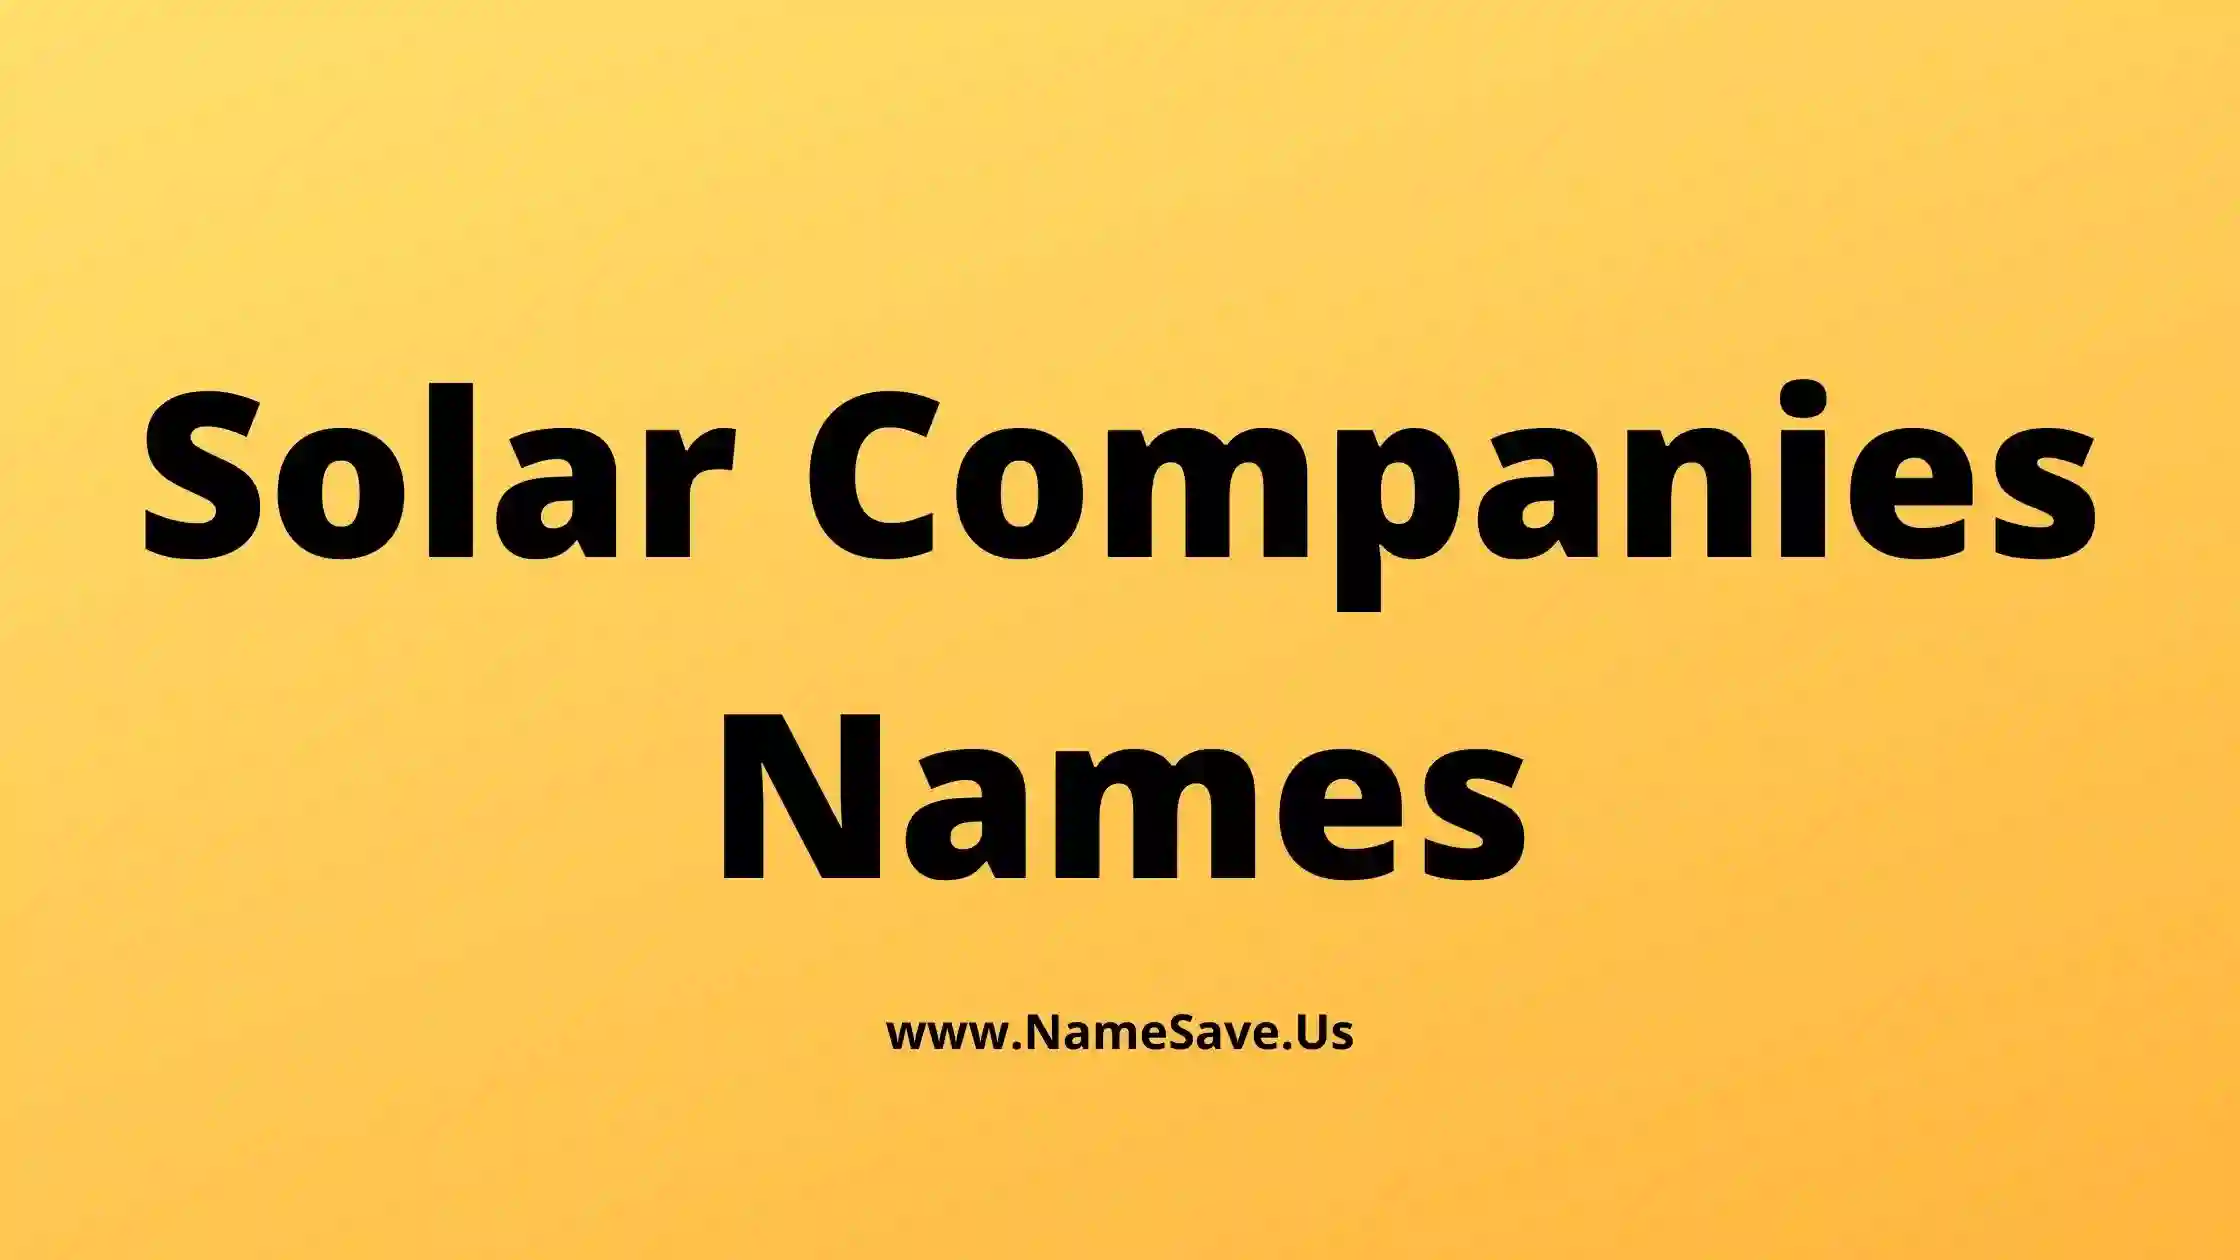 Solar Companies Names